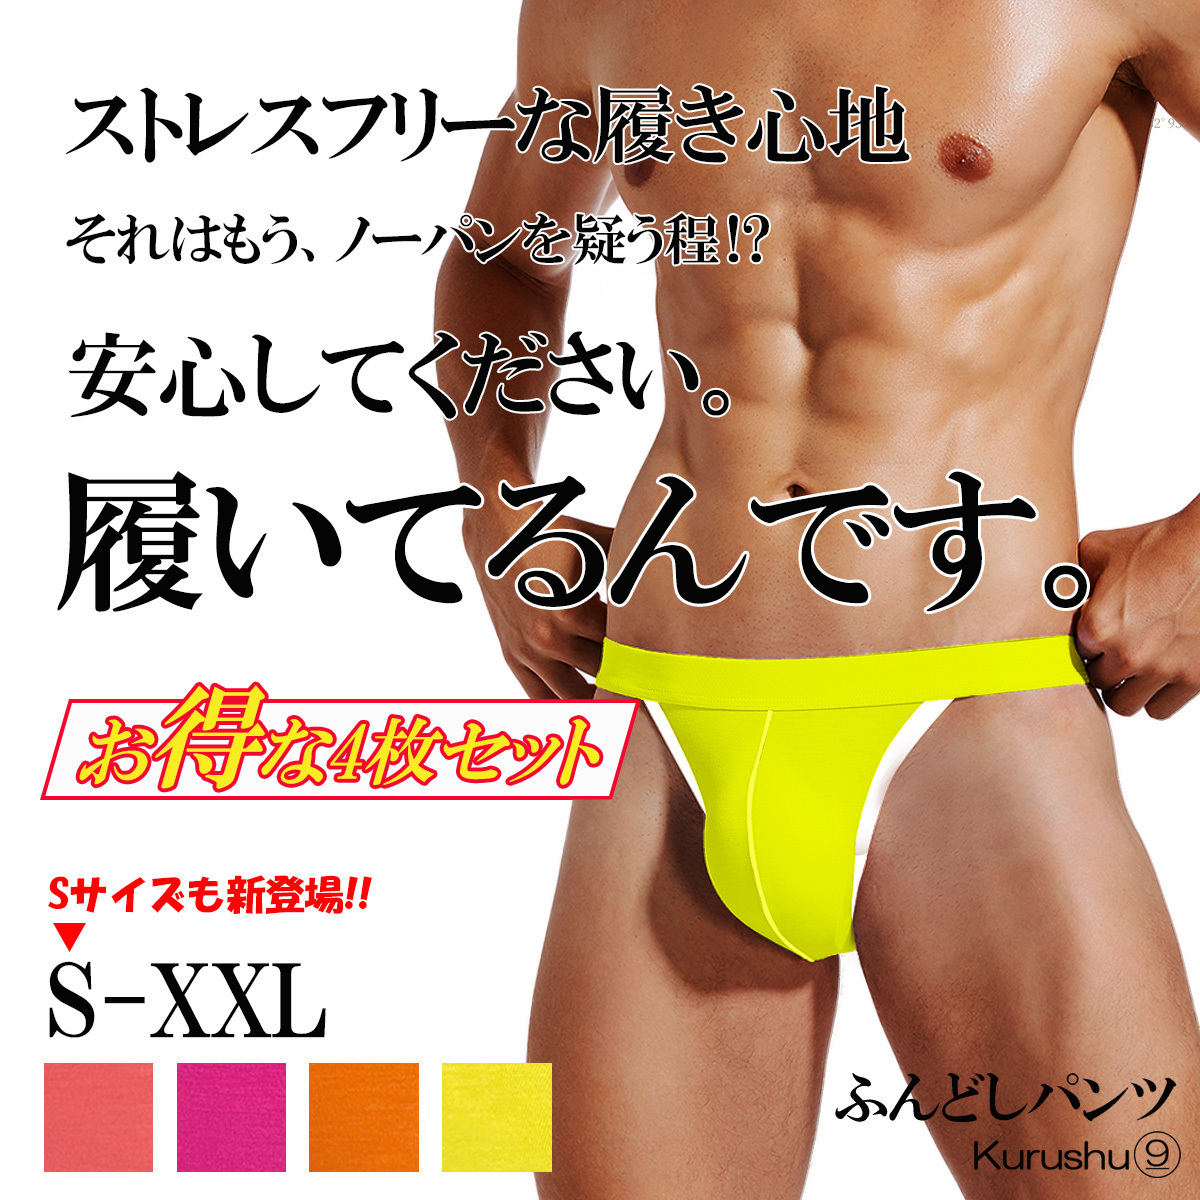  fundoshi pants [ profitable 4 sheets set ] men's bikini bikini Brief men's underwear men's shorts bikini bi bit color fundoshi fundoshi manner 